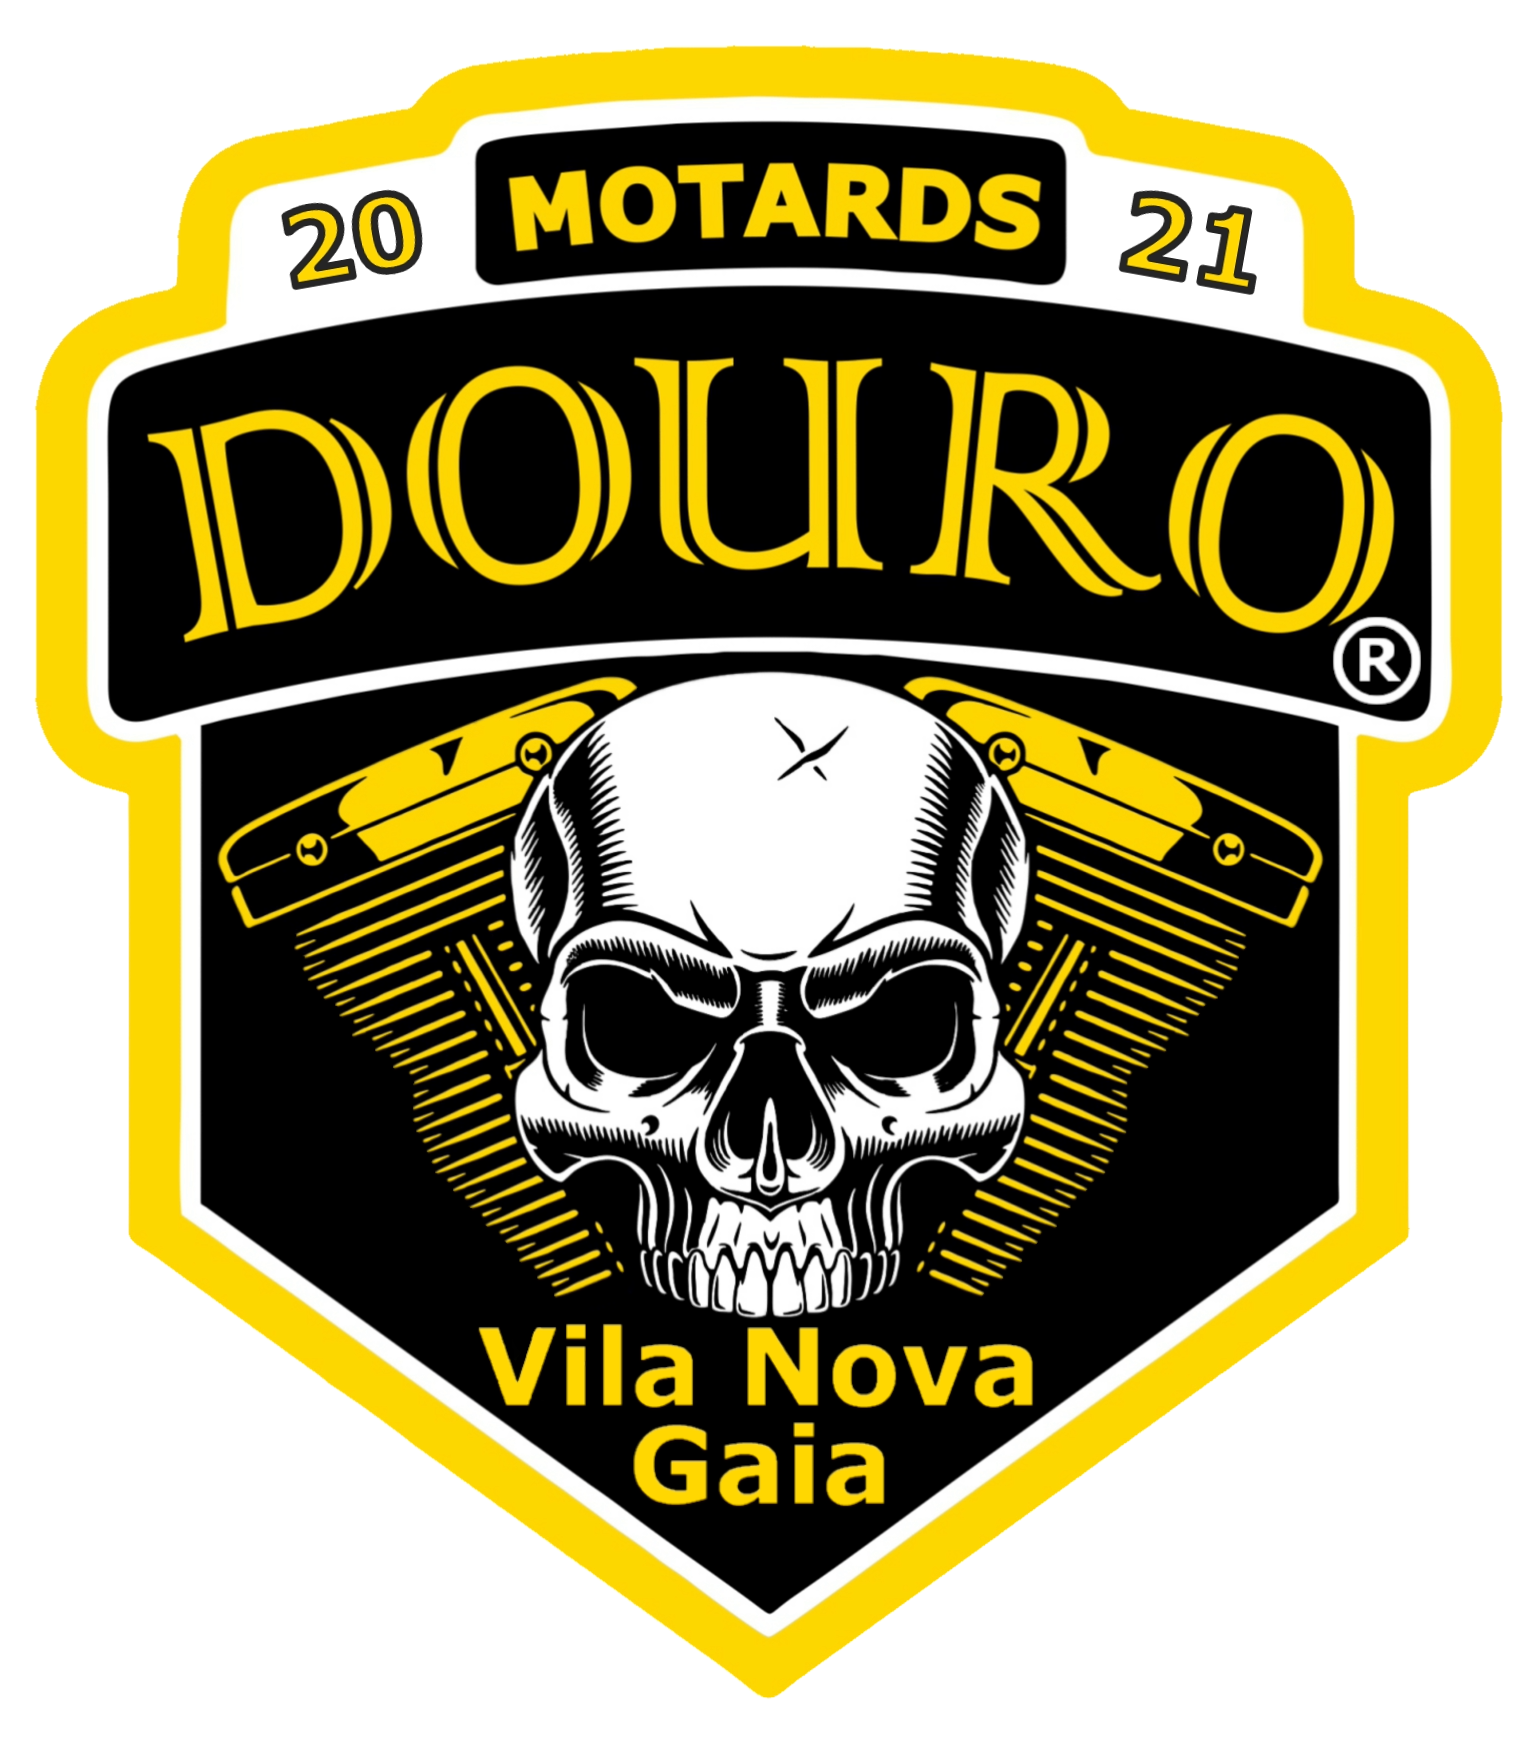 Motards Douro